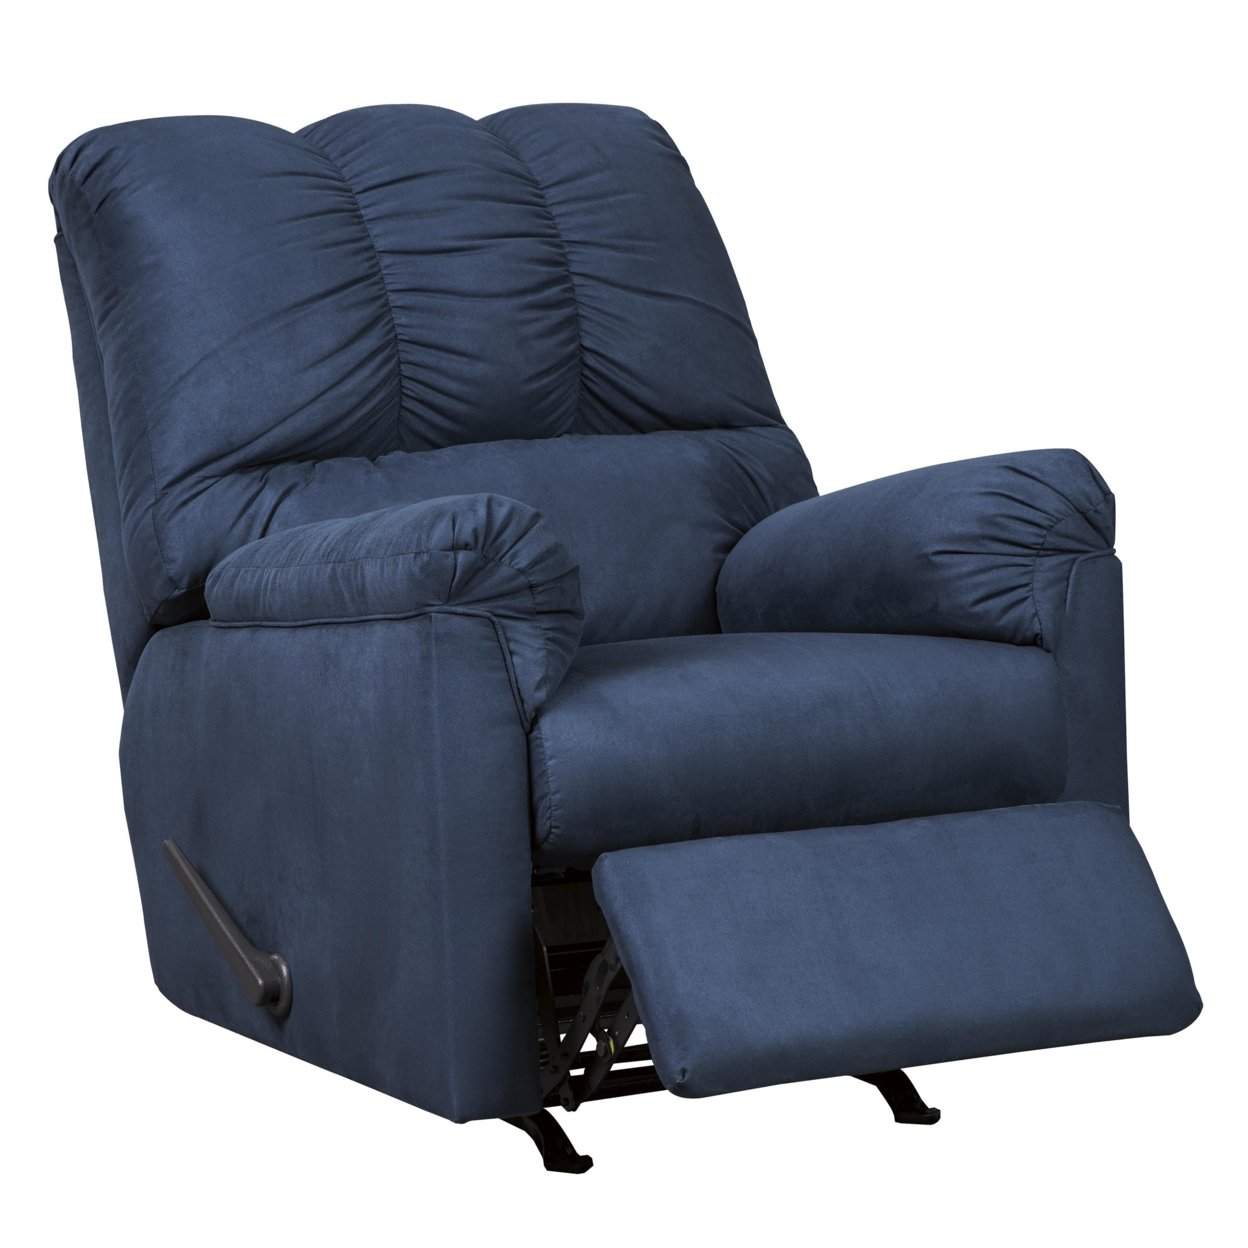 Fabric Upholstered Rocker Recliner With Tufted Backrest, Blue- Saltoro Sherpi